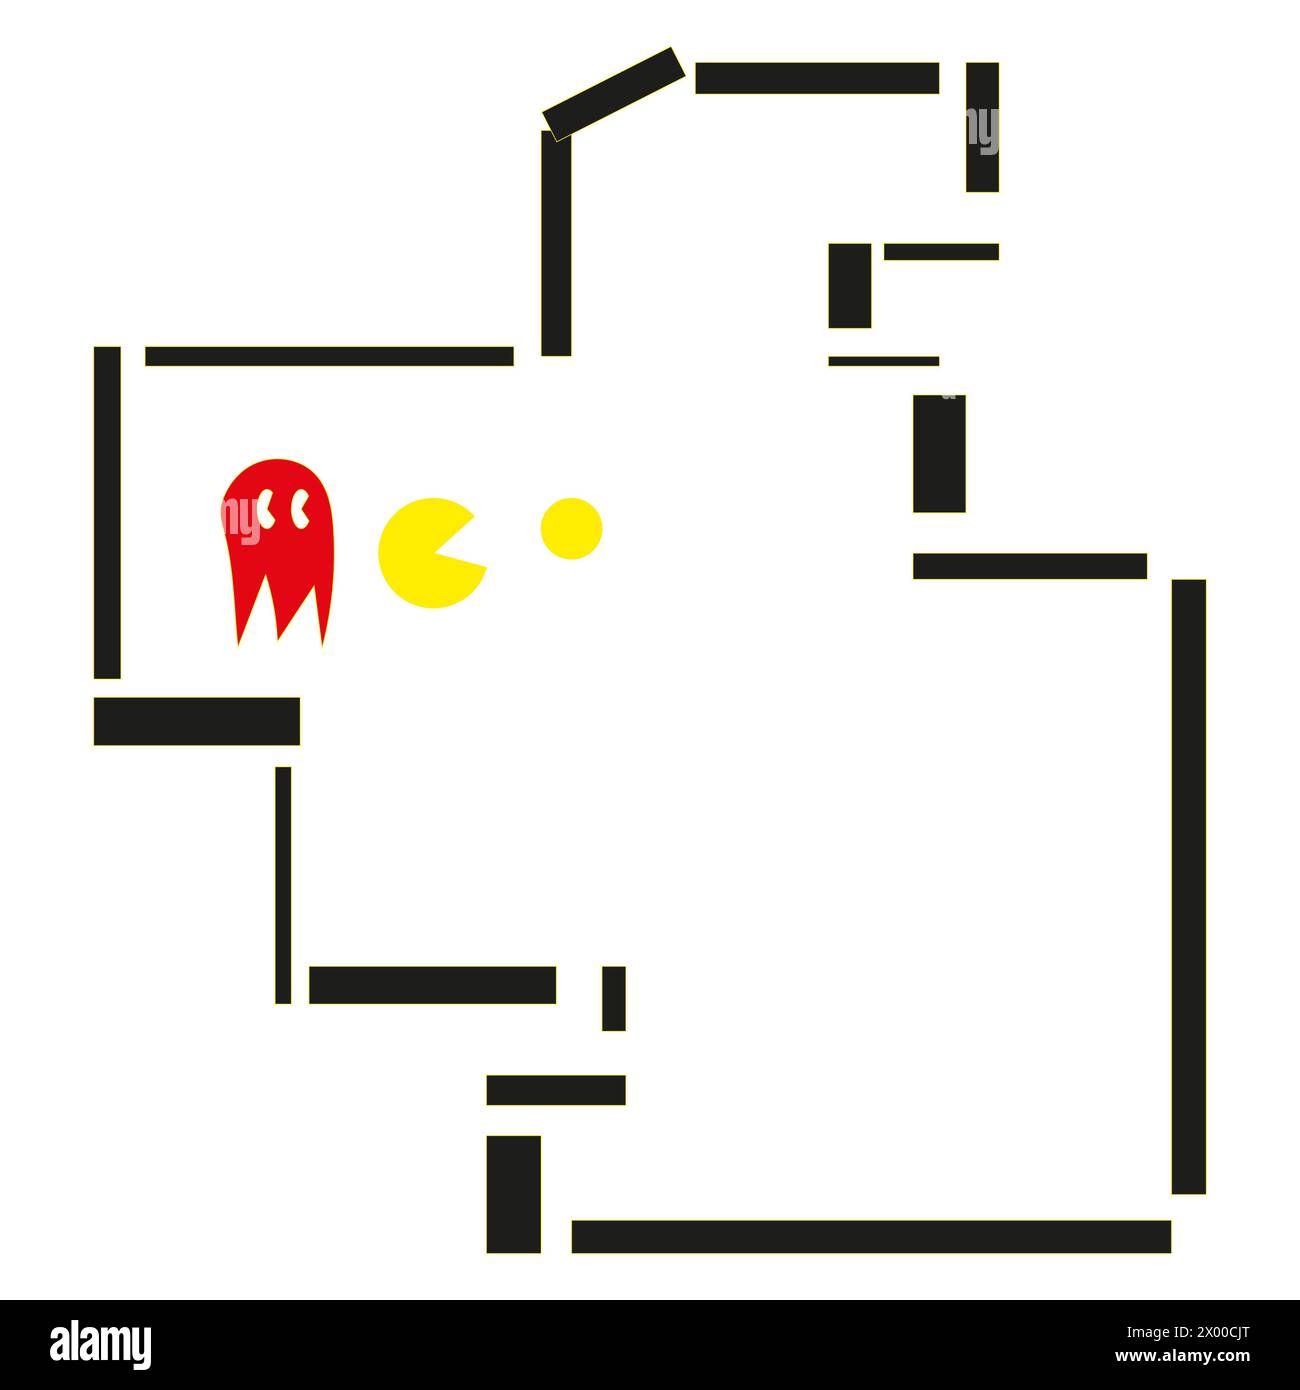 Retro arcade game scene. Pac-Man inspired digital design. Vector illustration. EPS 10. Stock Vector